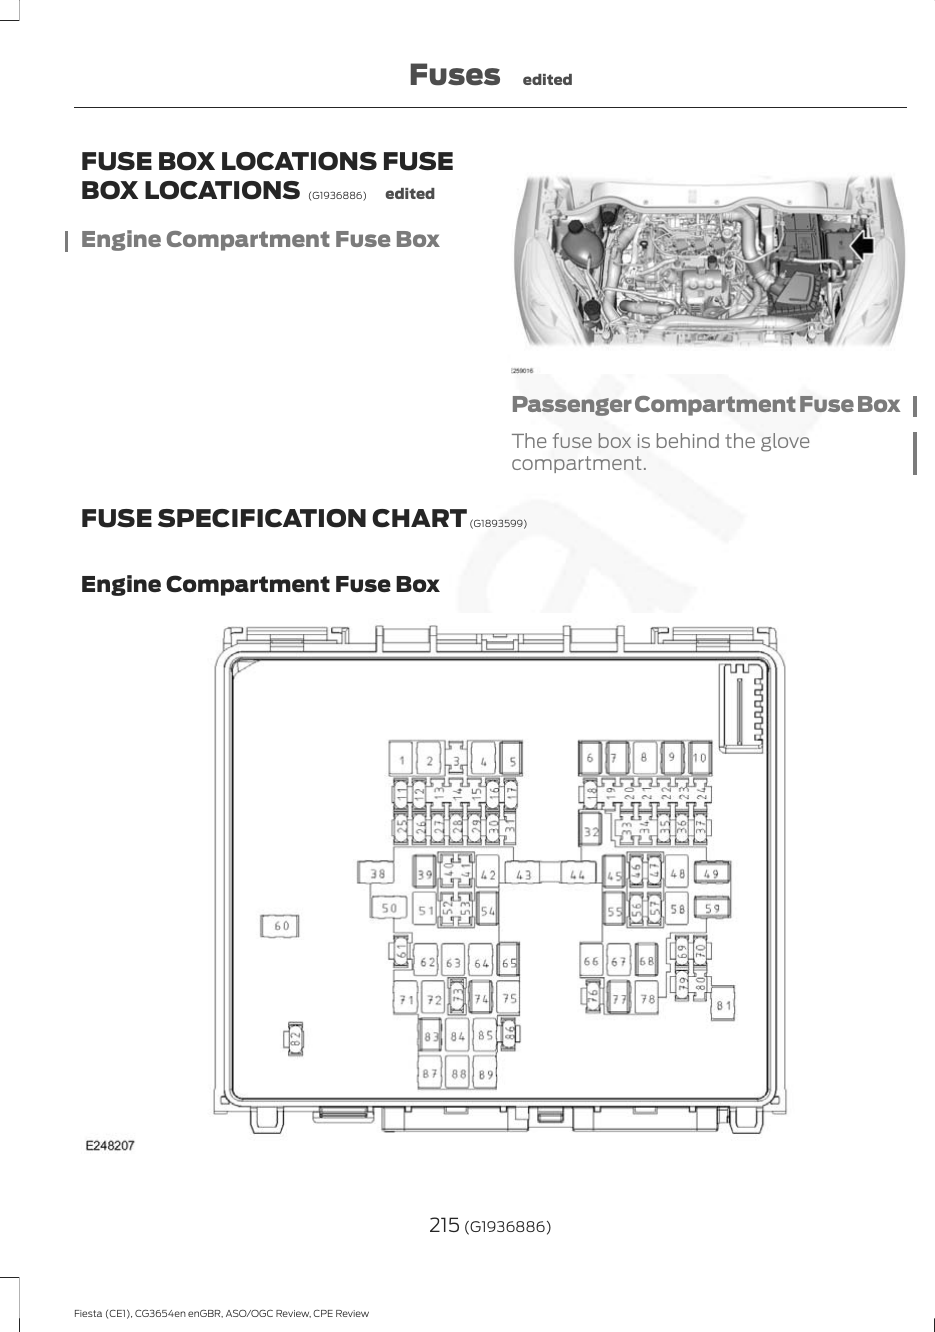 FUSE BOX LOCATIONS FUSEBOX LOCATIONS  (G1936886) editedEngine Compartment Fuse BoxPassenger Compartment Fuse BoxThe fuse box is behind the glovecompartment.FUSE SPECIFICATION CHART (G1893599)Engine Compartment Fuse Box215 (G1936886)Fiesta (CE1), CG3654en enGBR, ASO/OGC Review, CPE ReviewFuses edited